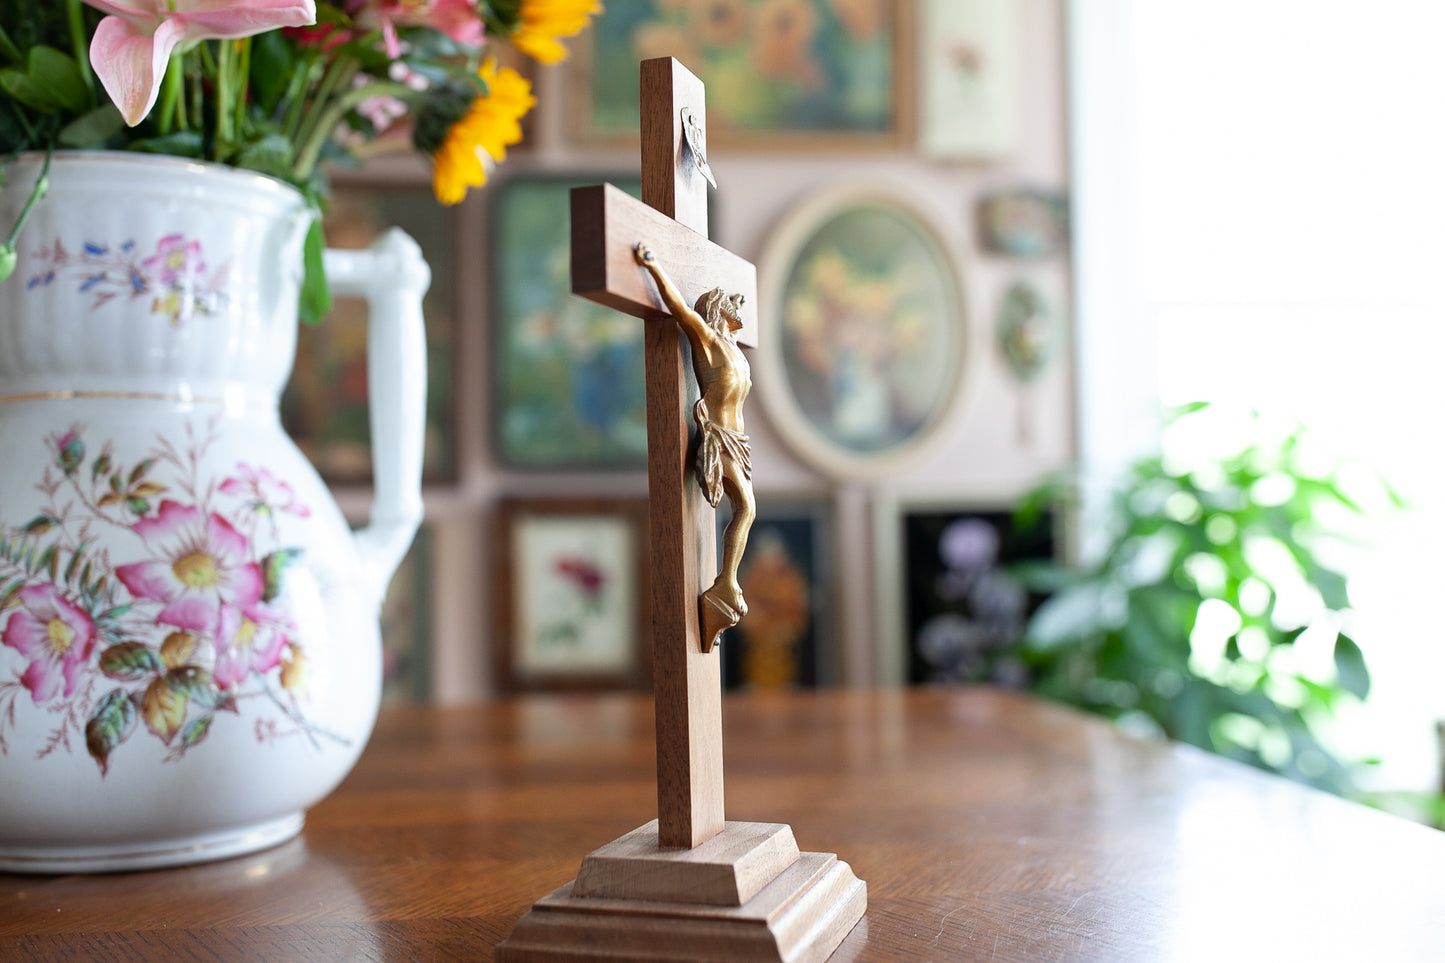 Vintage Wooden Crucifix